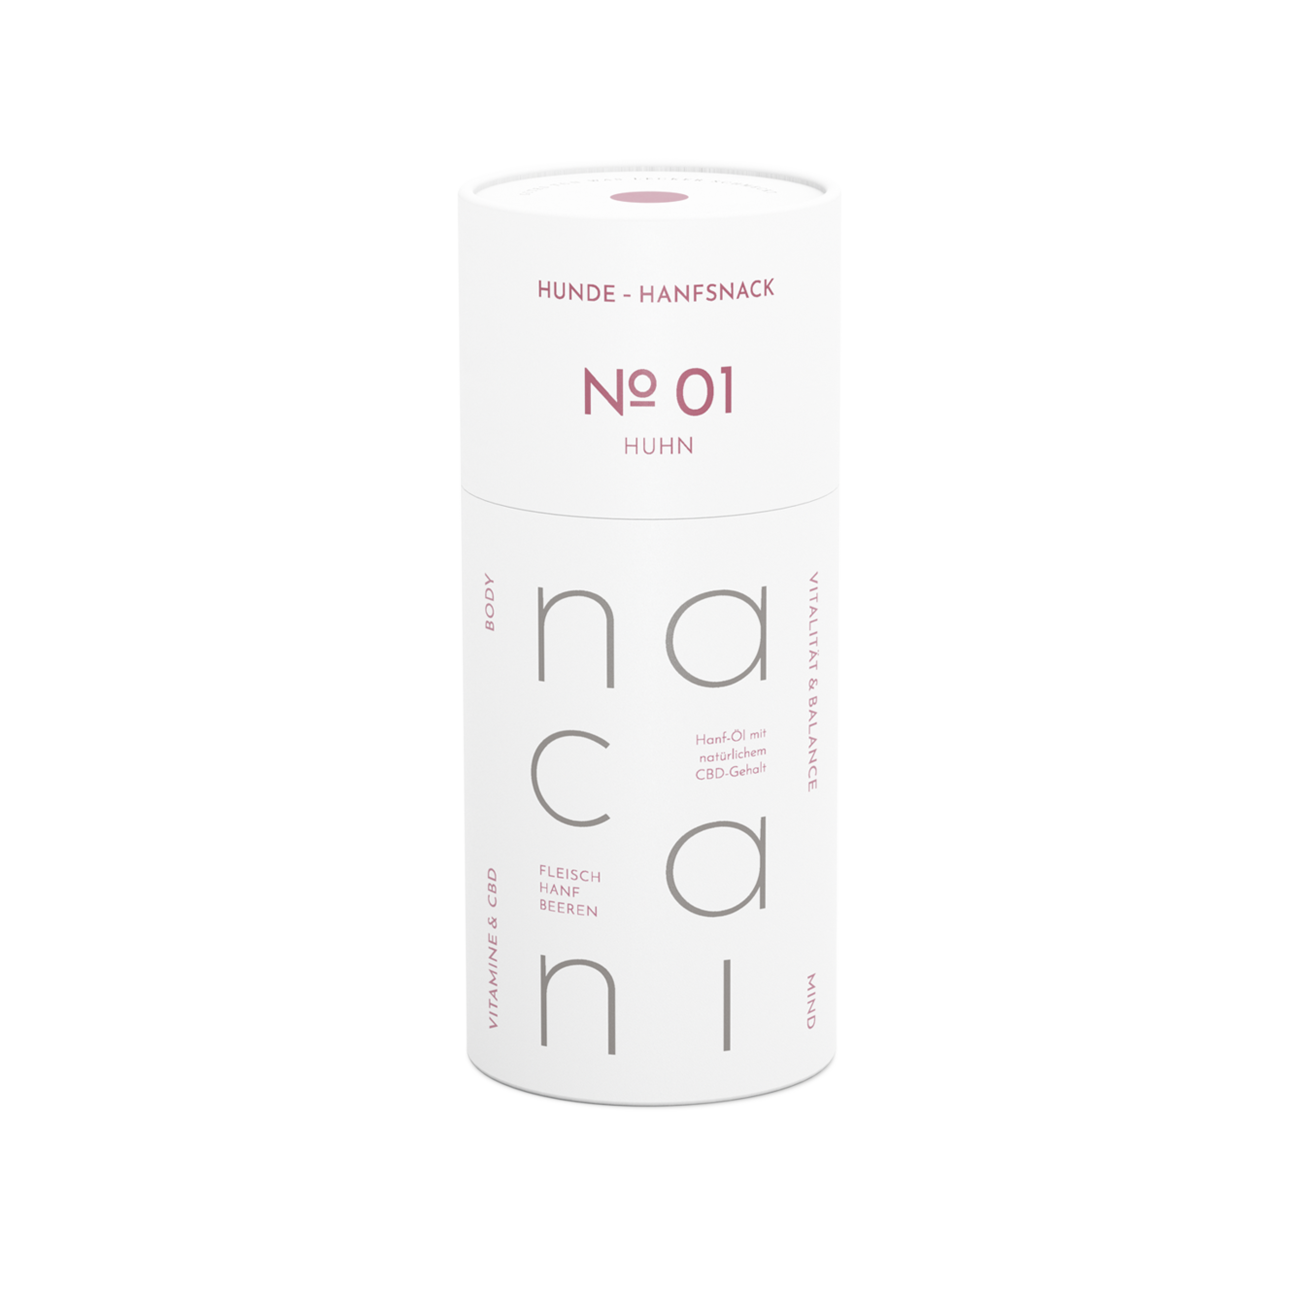 Nacani | Hemp treats chicken with natural CBD content 